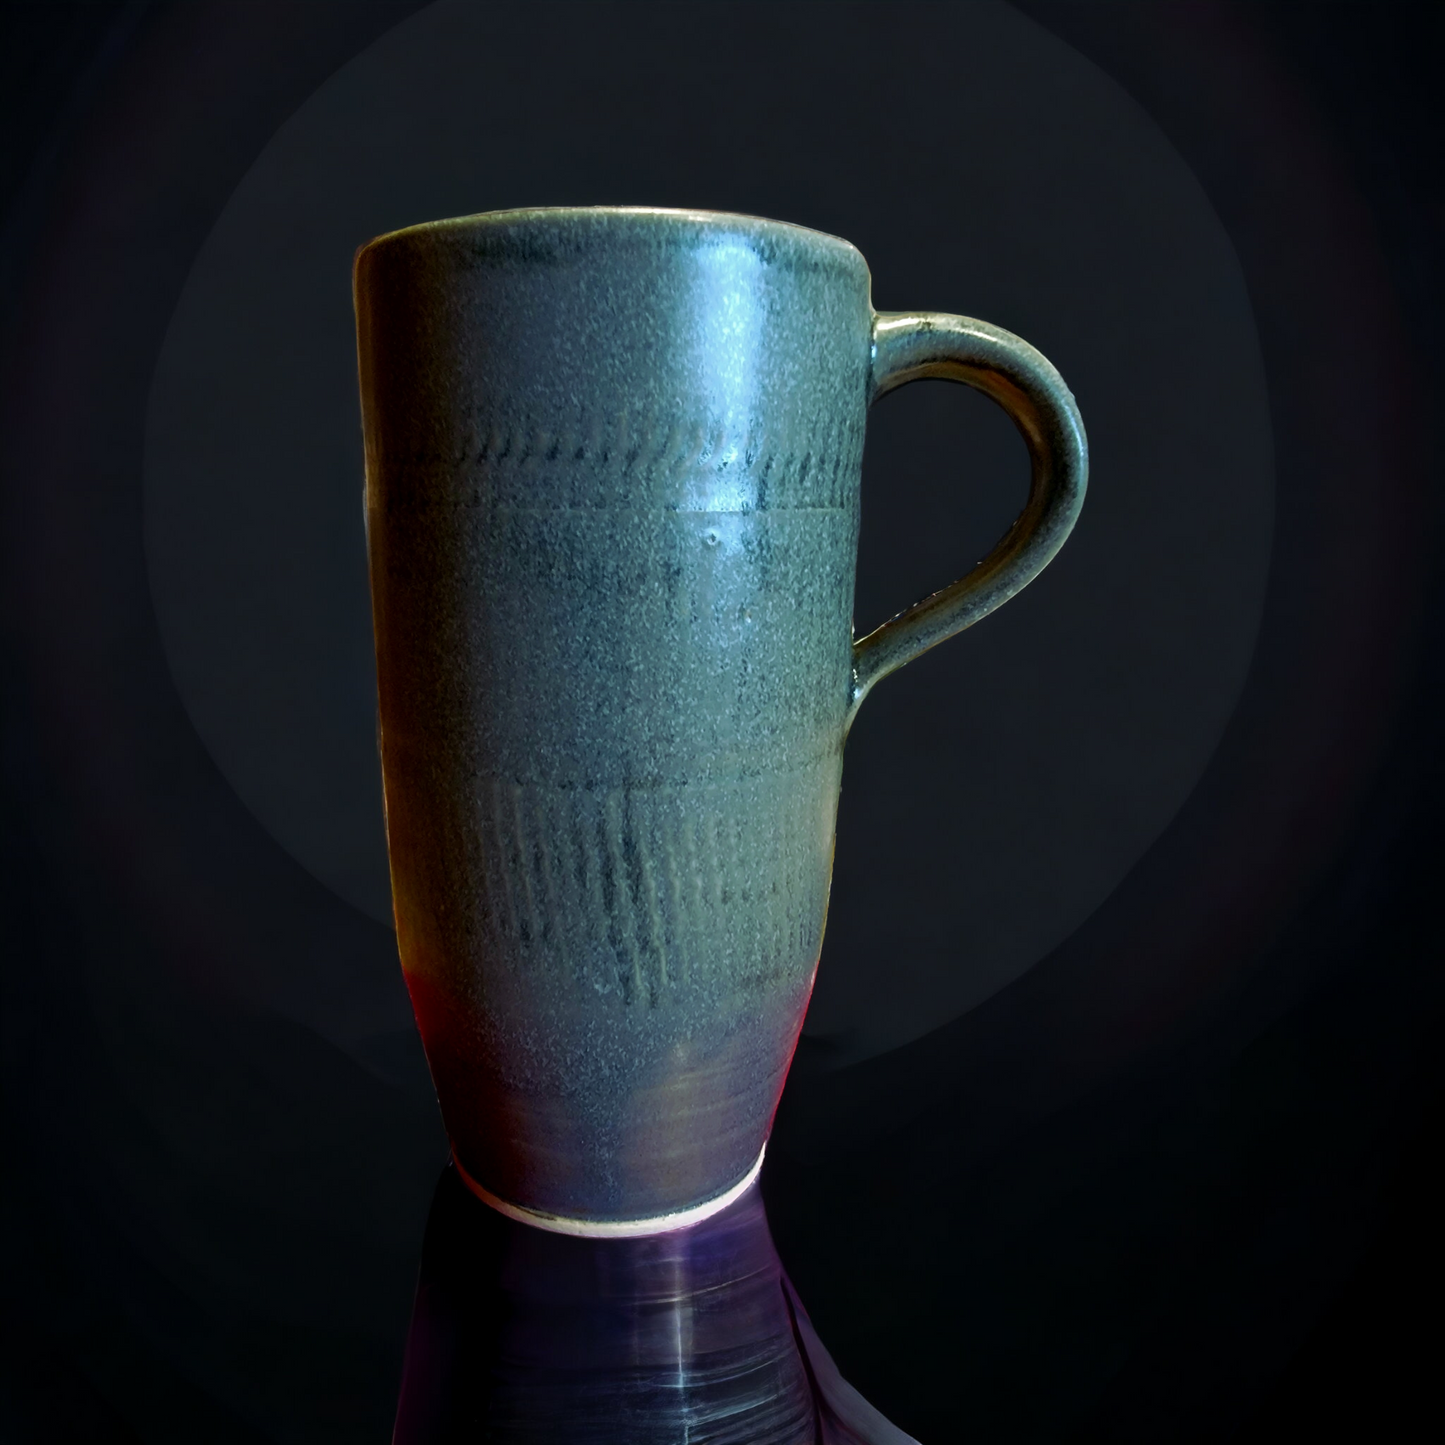 Ceramic Mug - #53 - SOLD